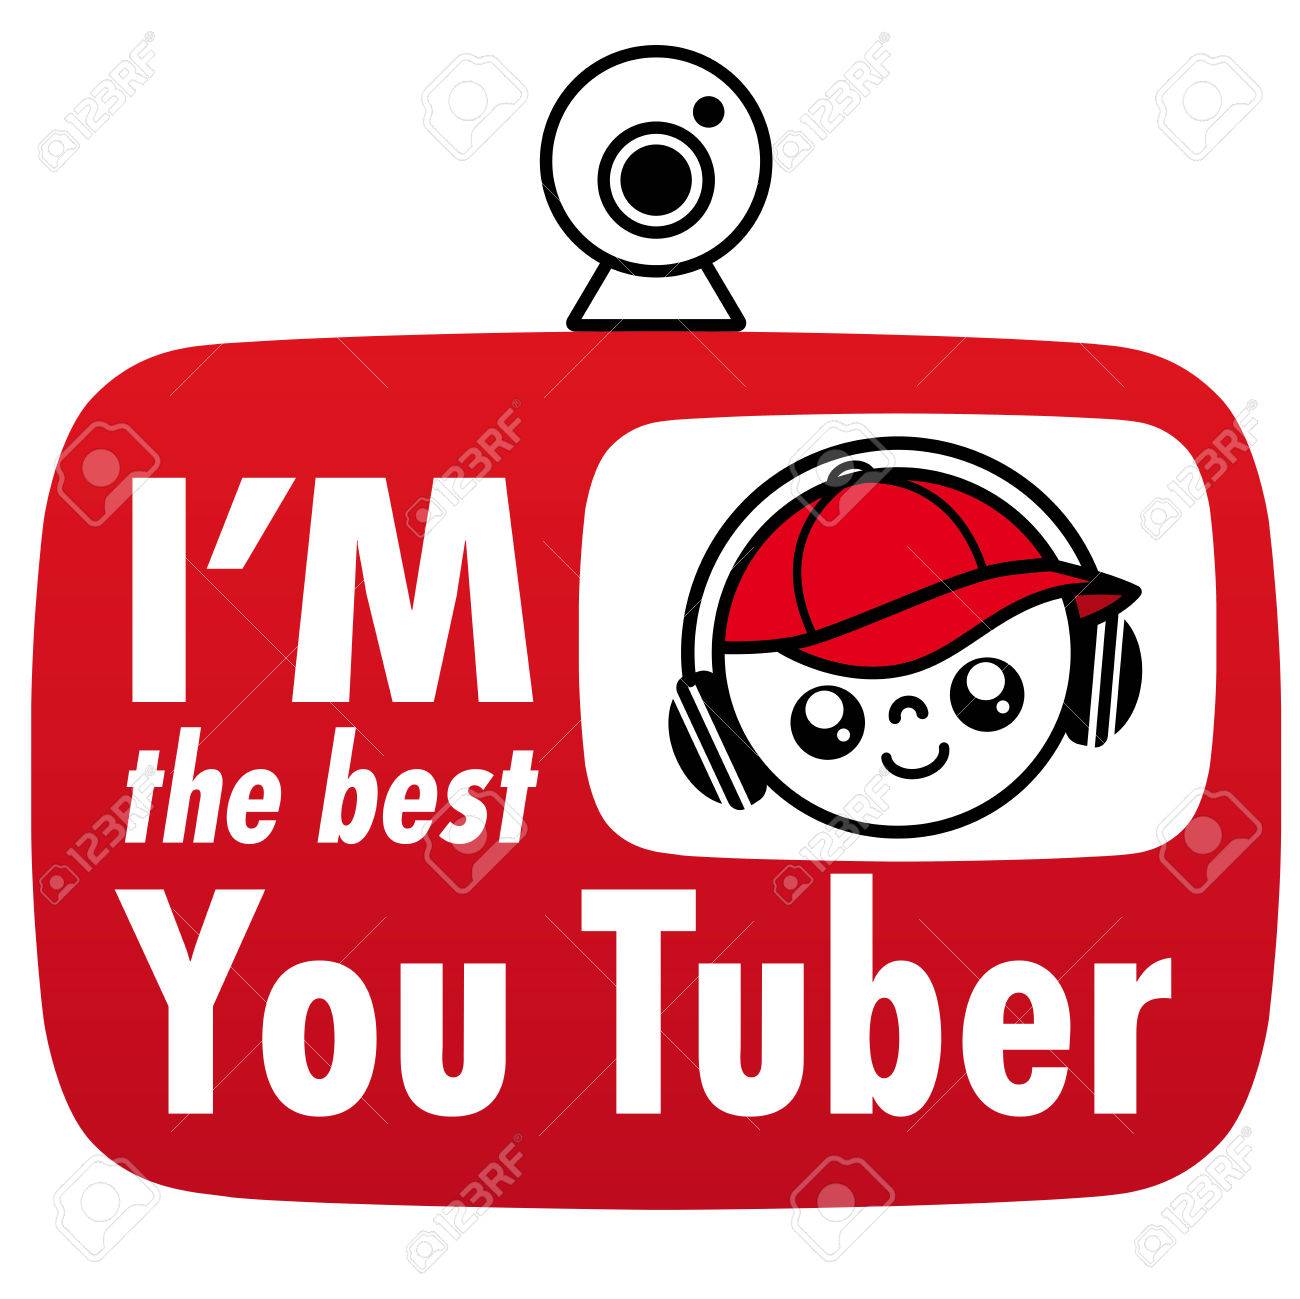 Epic, youtube, youtuber icon | Icon search engine